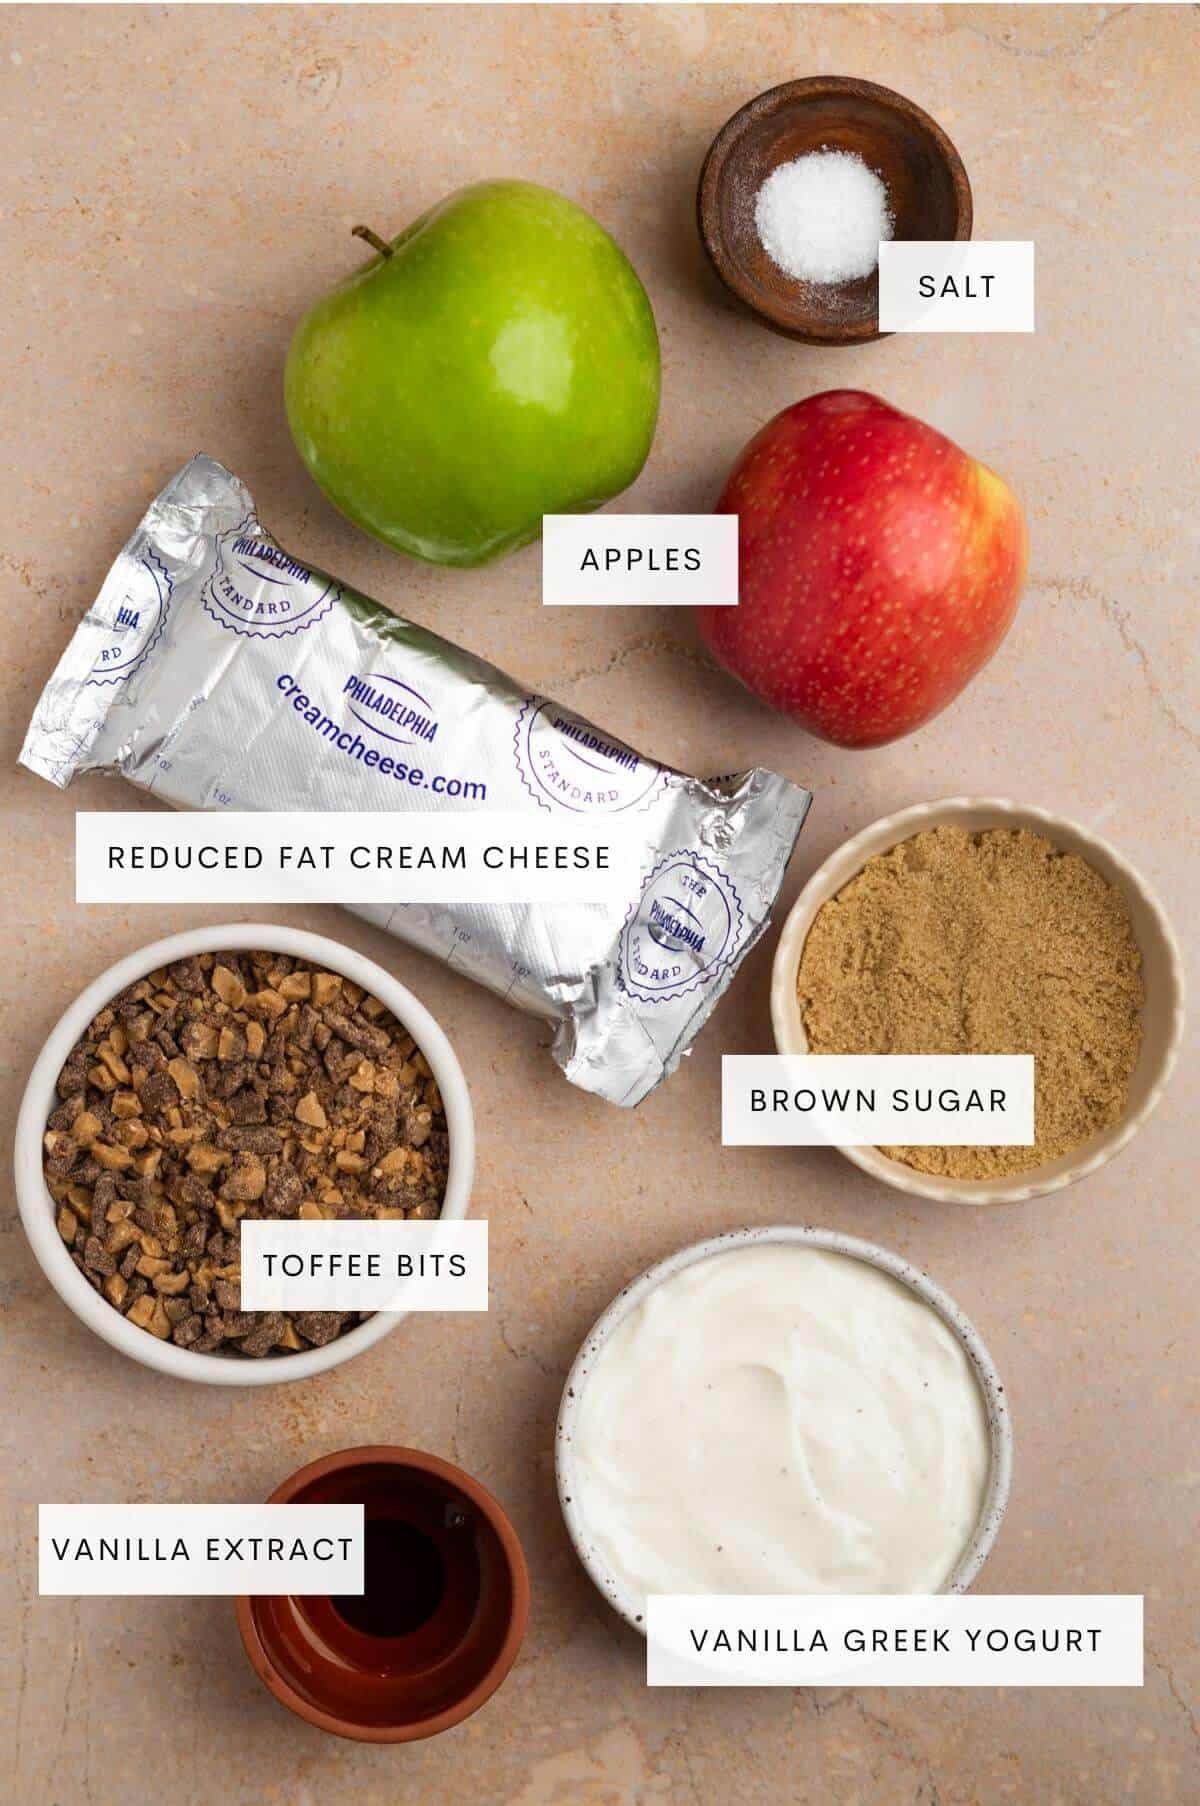 Ingredients needed for toffee apple dip: Apples, cream cheese, brown sugar, salt, vanilla Greek yogurt, vanilla extract, and salt.